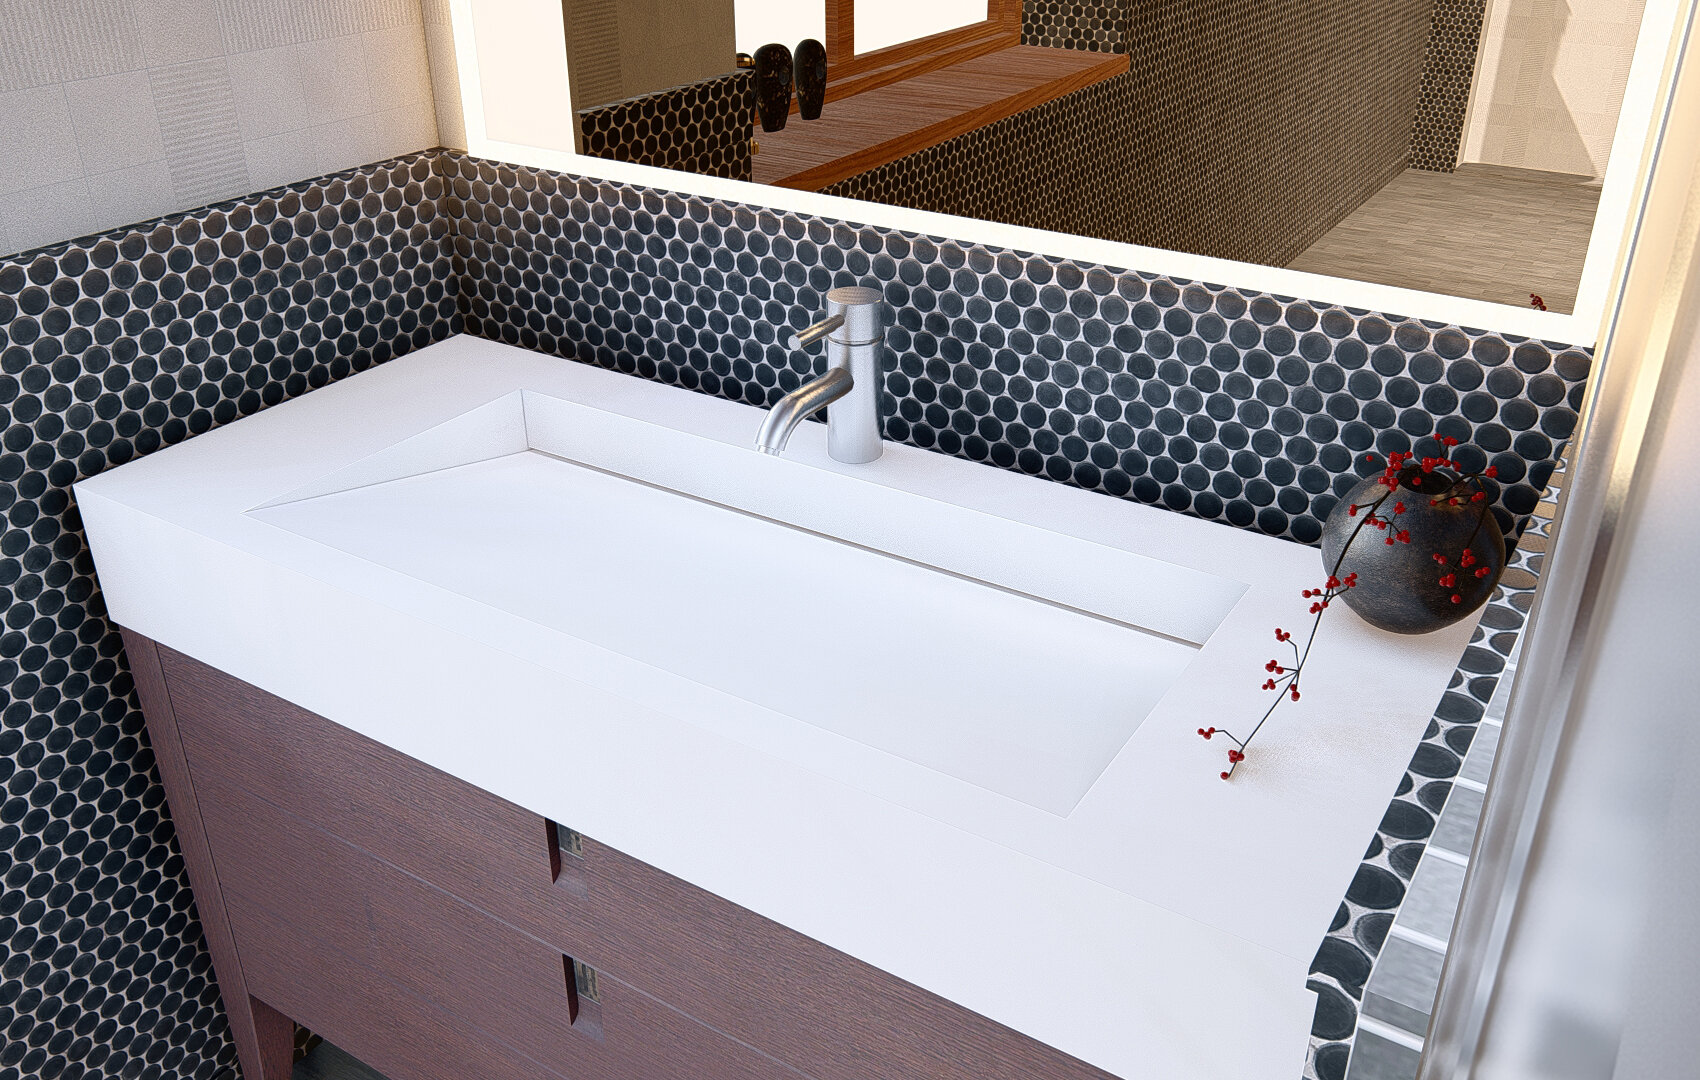 Castellousa Audrey 48 Single Bathroom Vanity Top With Sink Reviews Wayfair